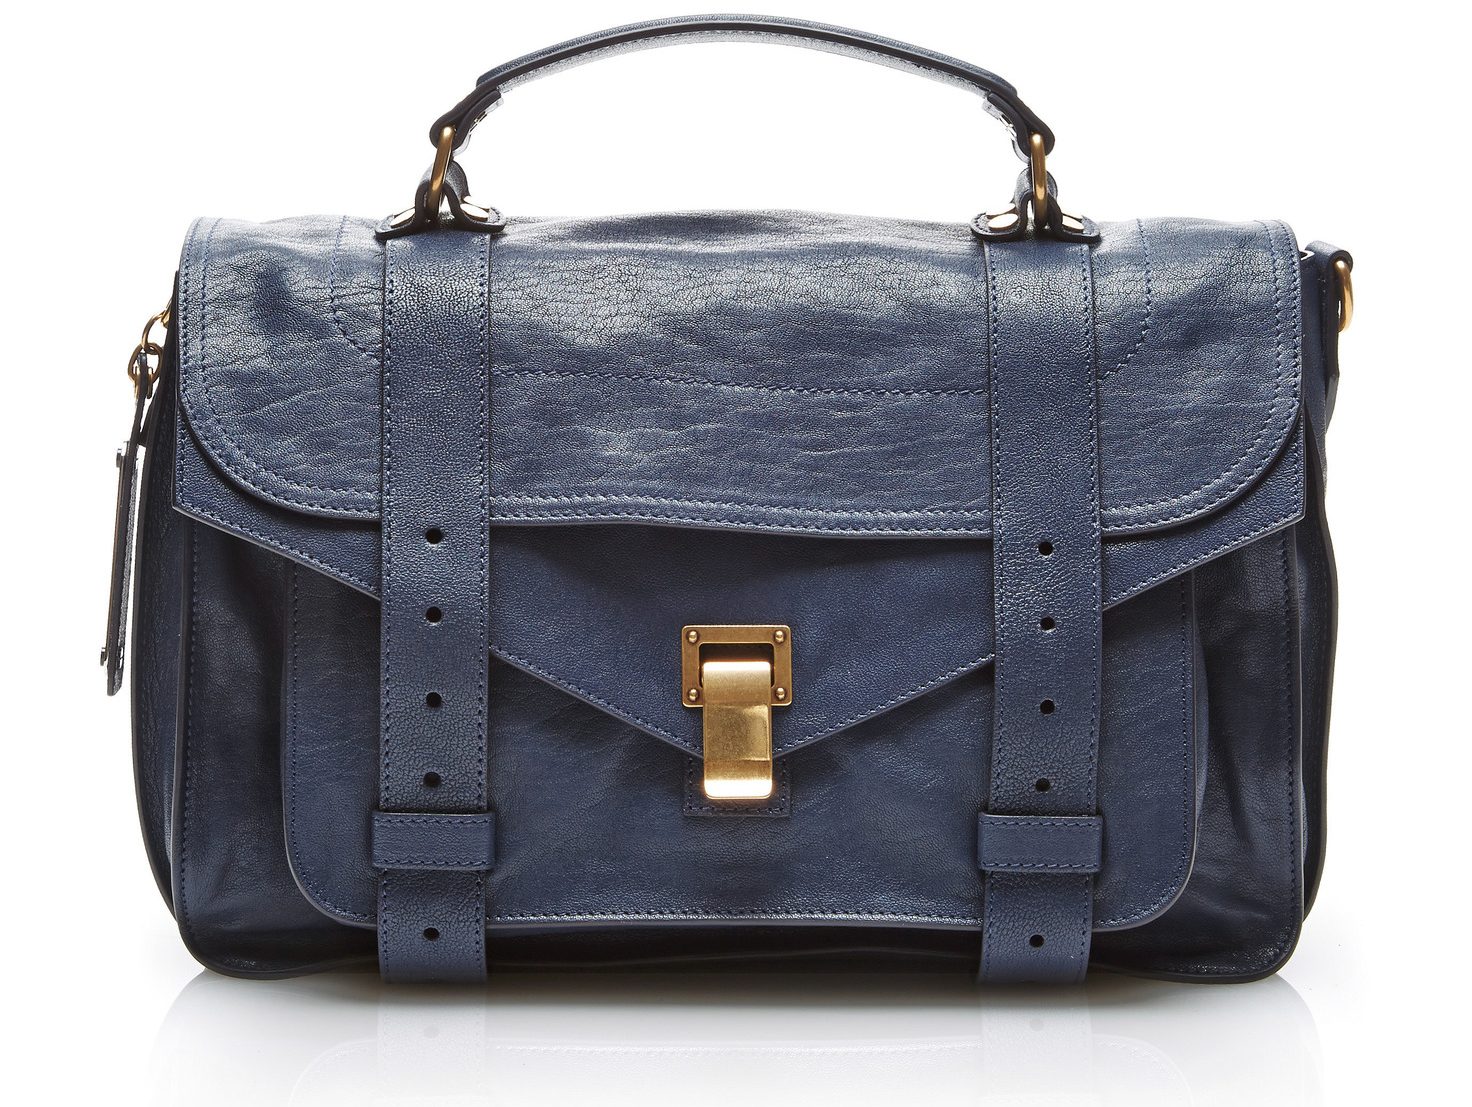 Proenza Schouler PS1 Medium Leather Satchel bag color midnight blue